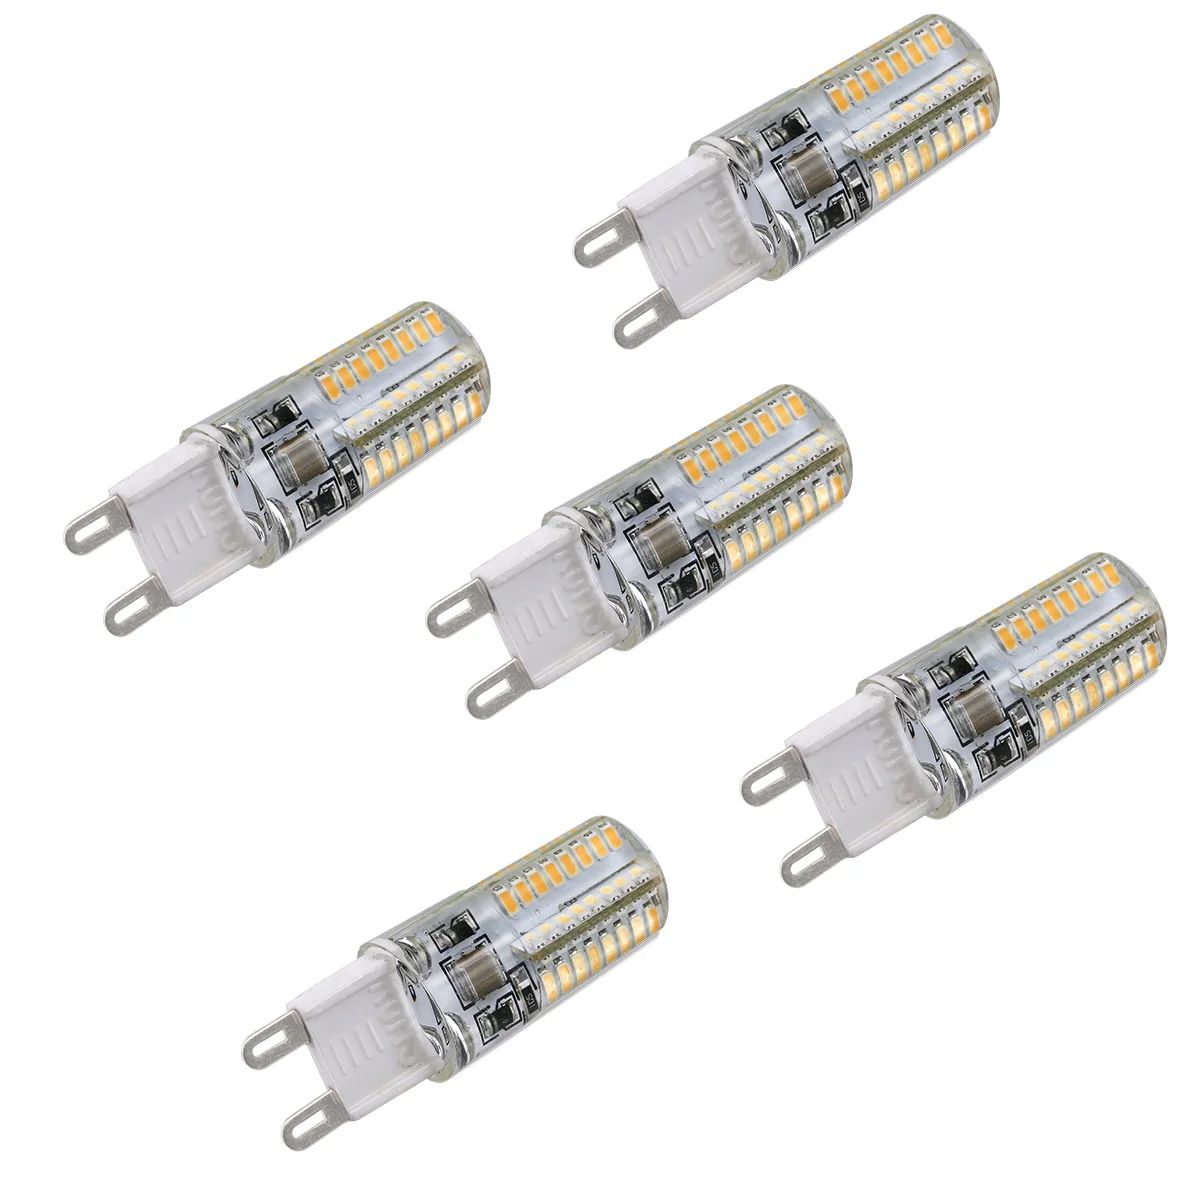 

PIXNOR 5pcs G9 3W AC 220V-240V 64 SMD 3014 LEDs 230LM 2800-3000K Energy-saving LED Bulb Lights LED Spotlights Lamps (Warm White)